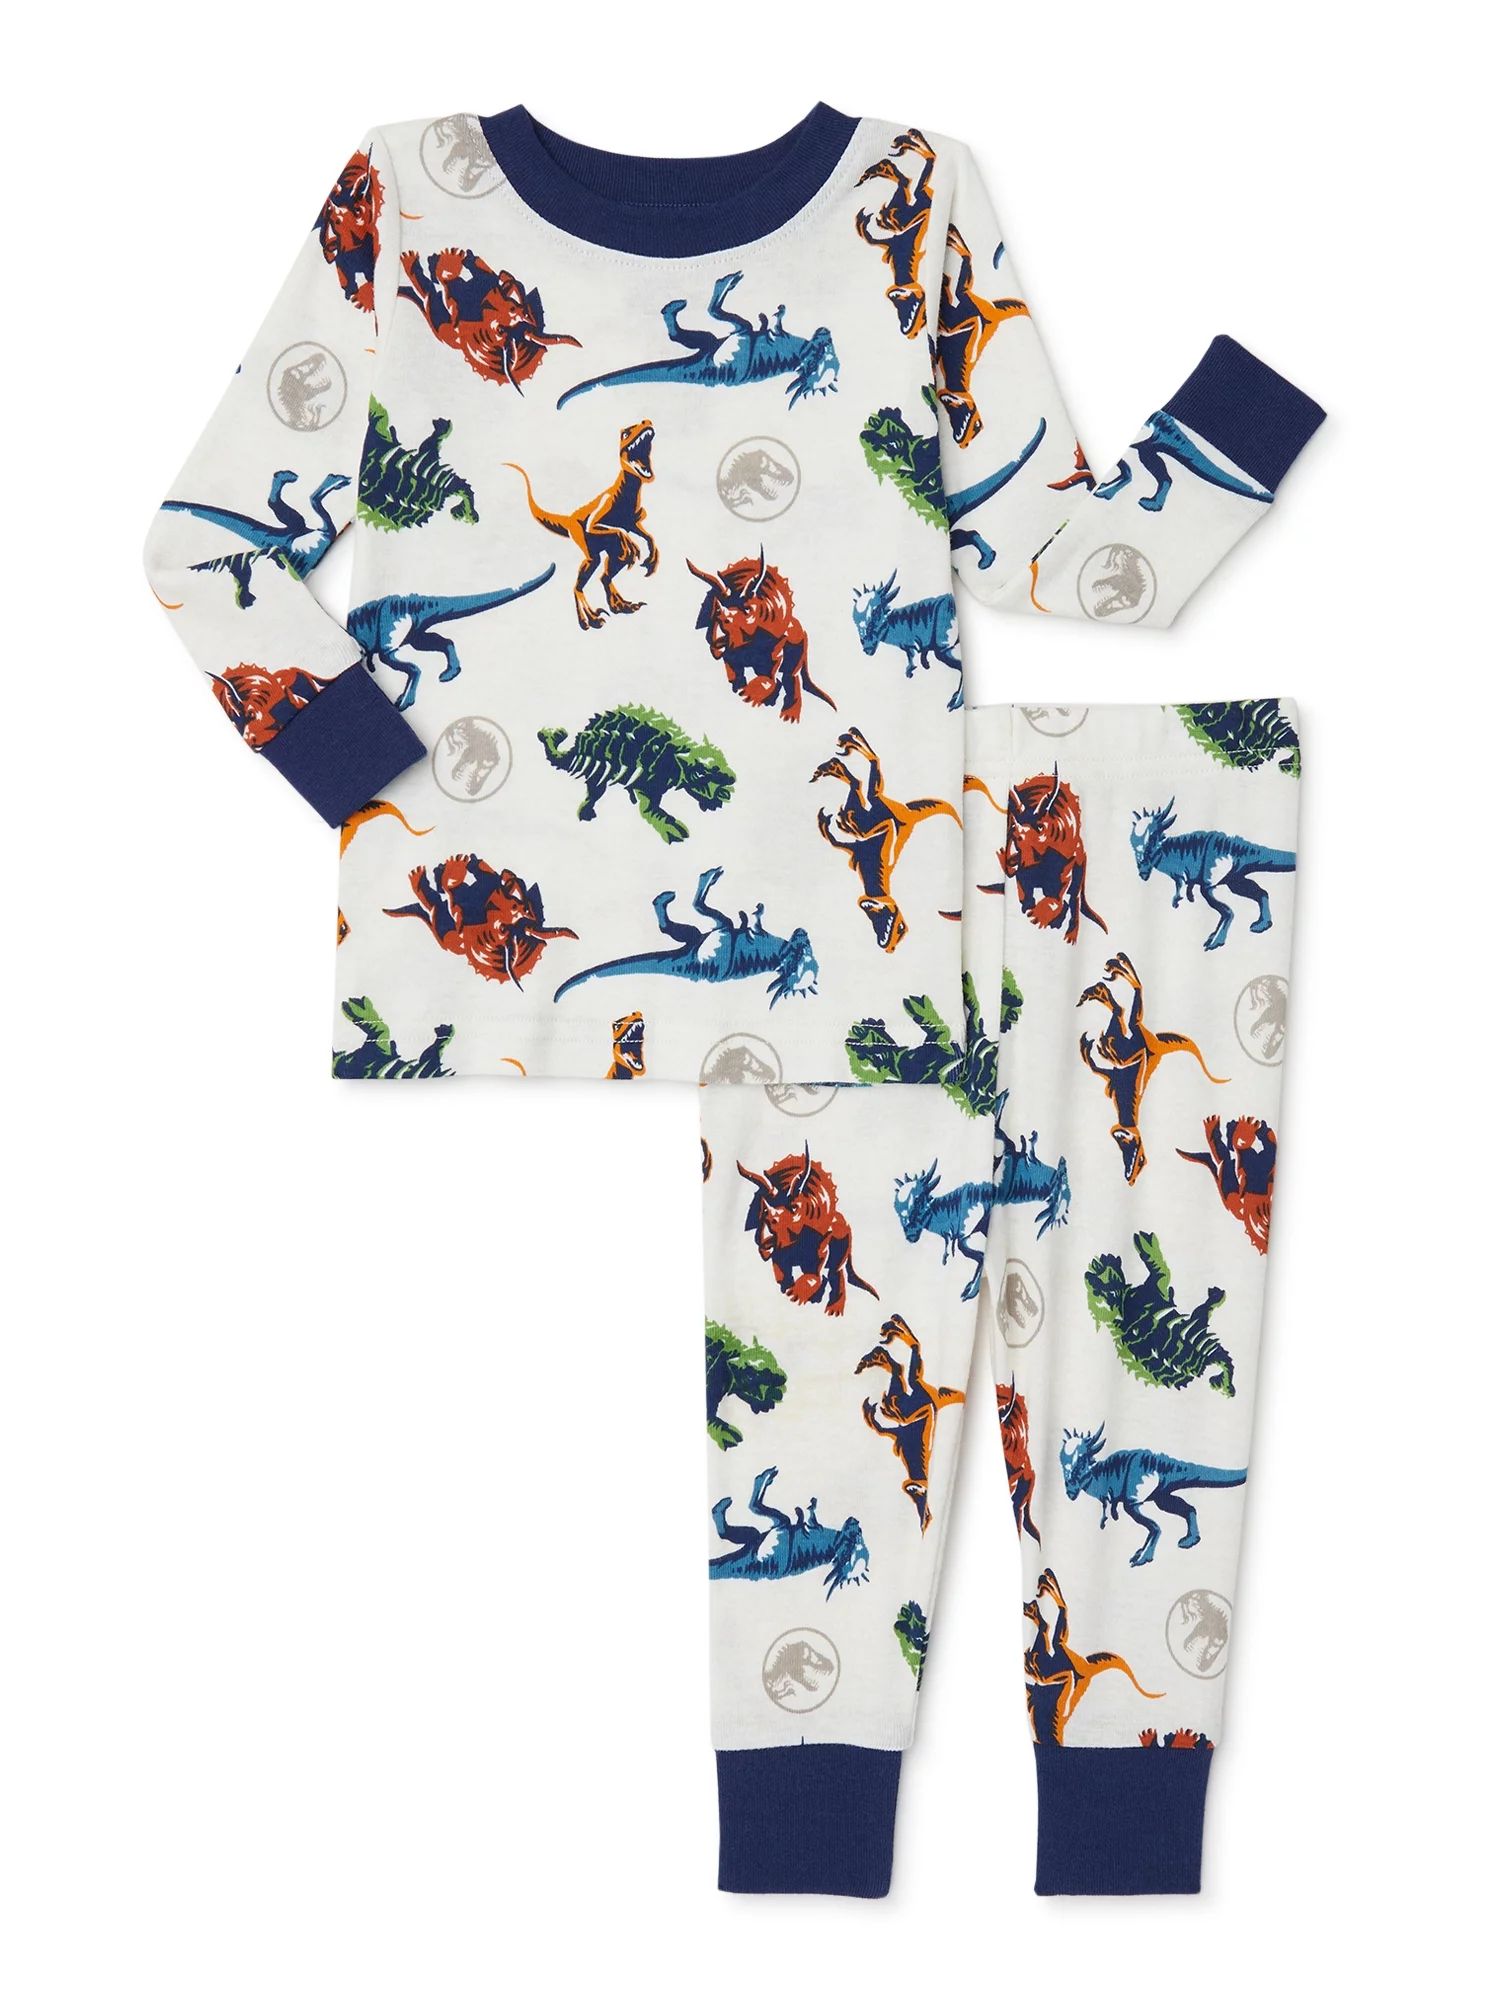 Toddler Character Pajamas, 2-Piece, Sizes 12M-5T - Walmart.com | Walmart (US)